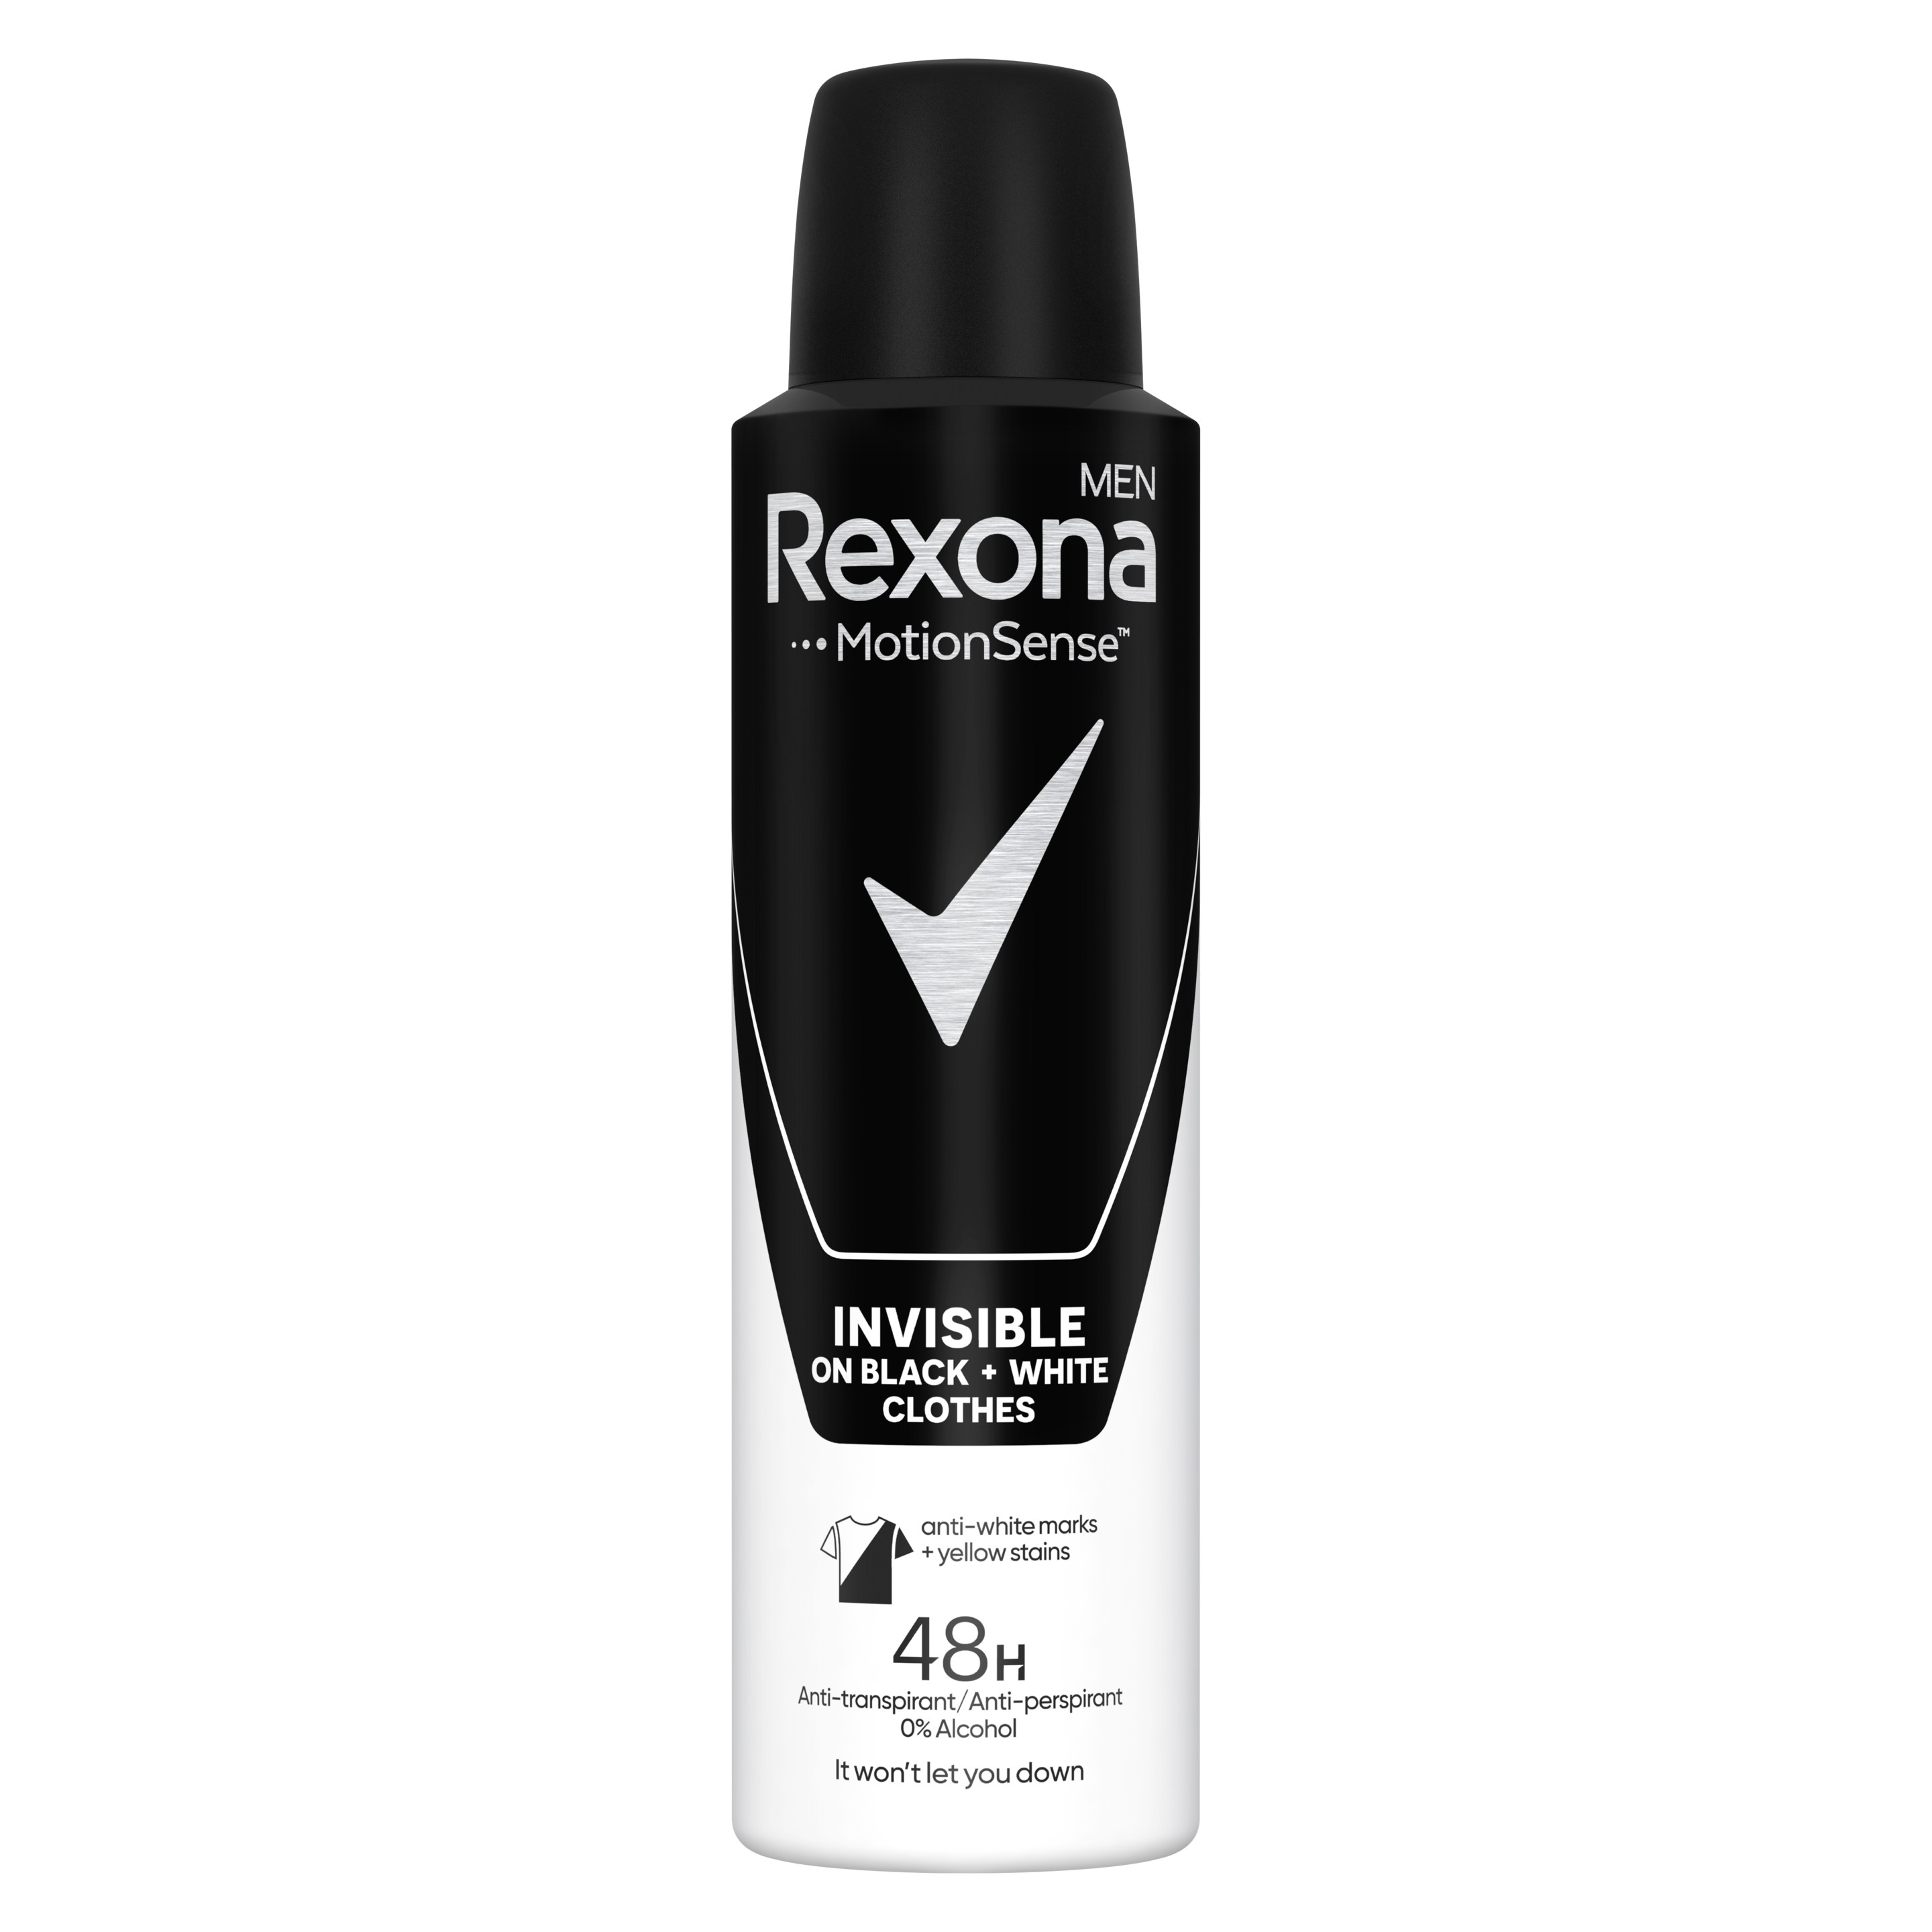 Rexona Invisible on Black+White Clothes Advanced Protection Spray Men 150ml